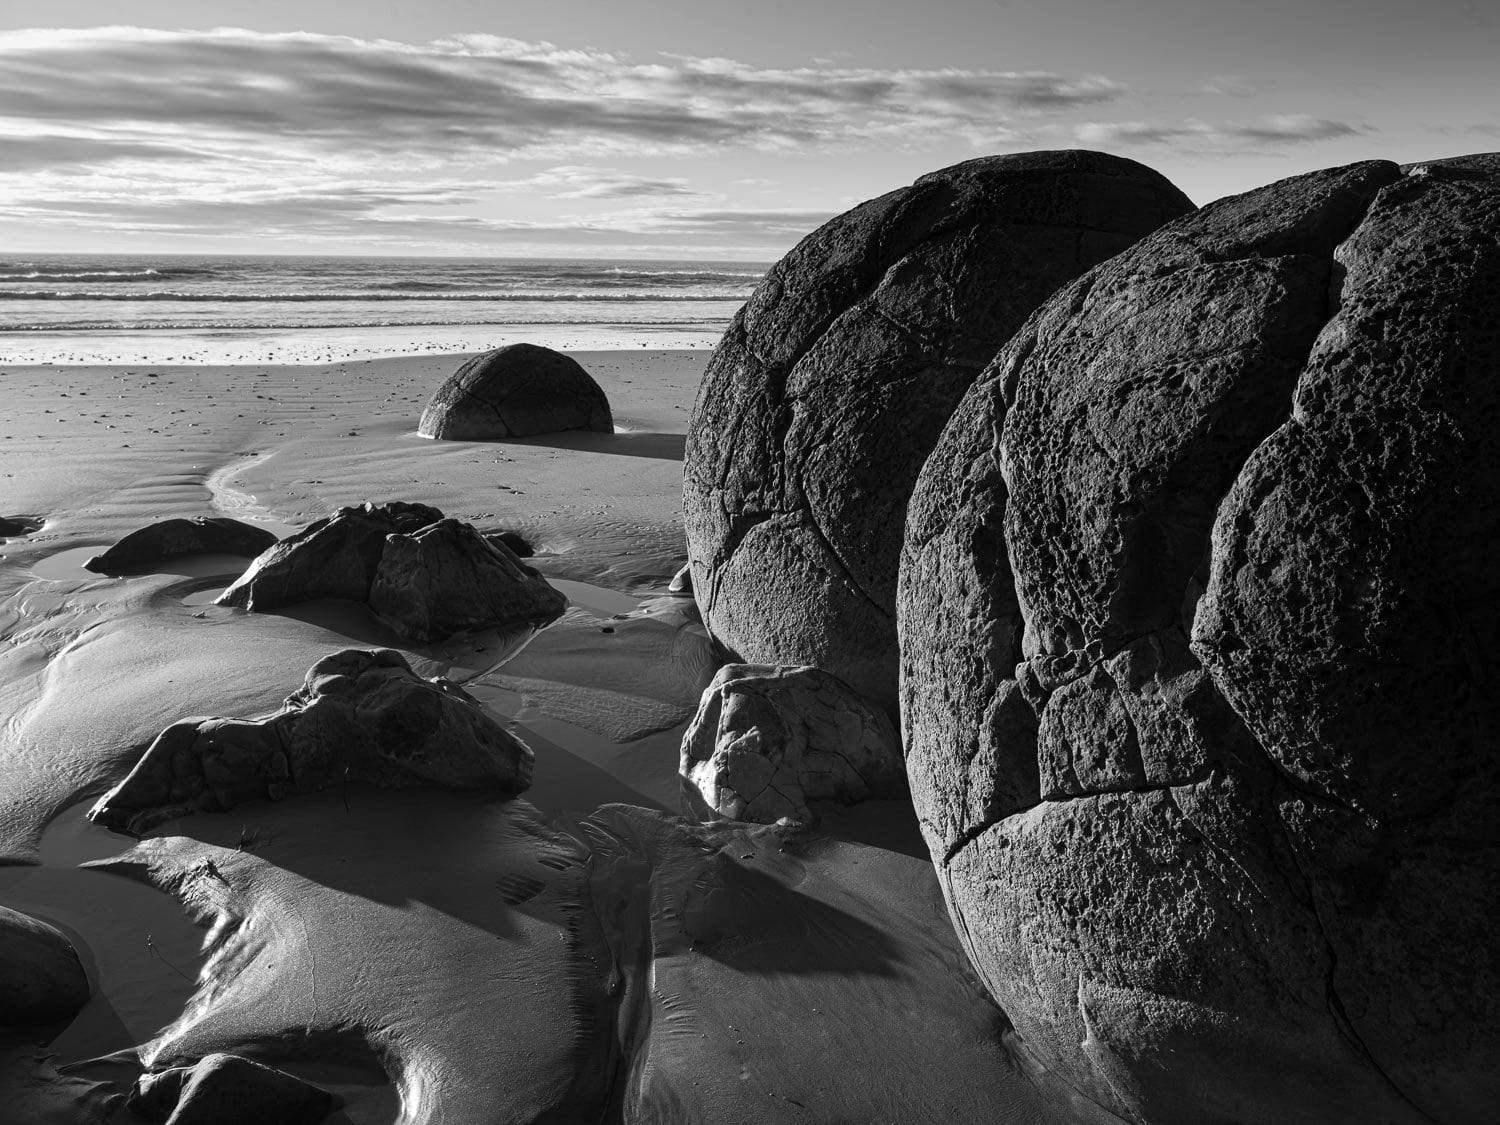 Giant boulder on a seashore-like land, Moeraki BW New Zealand Art